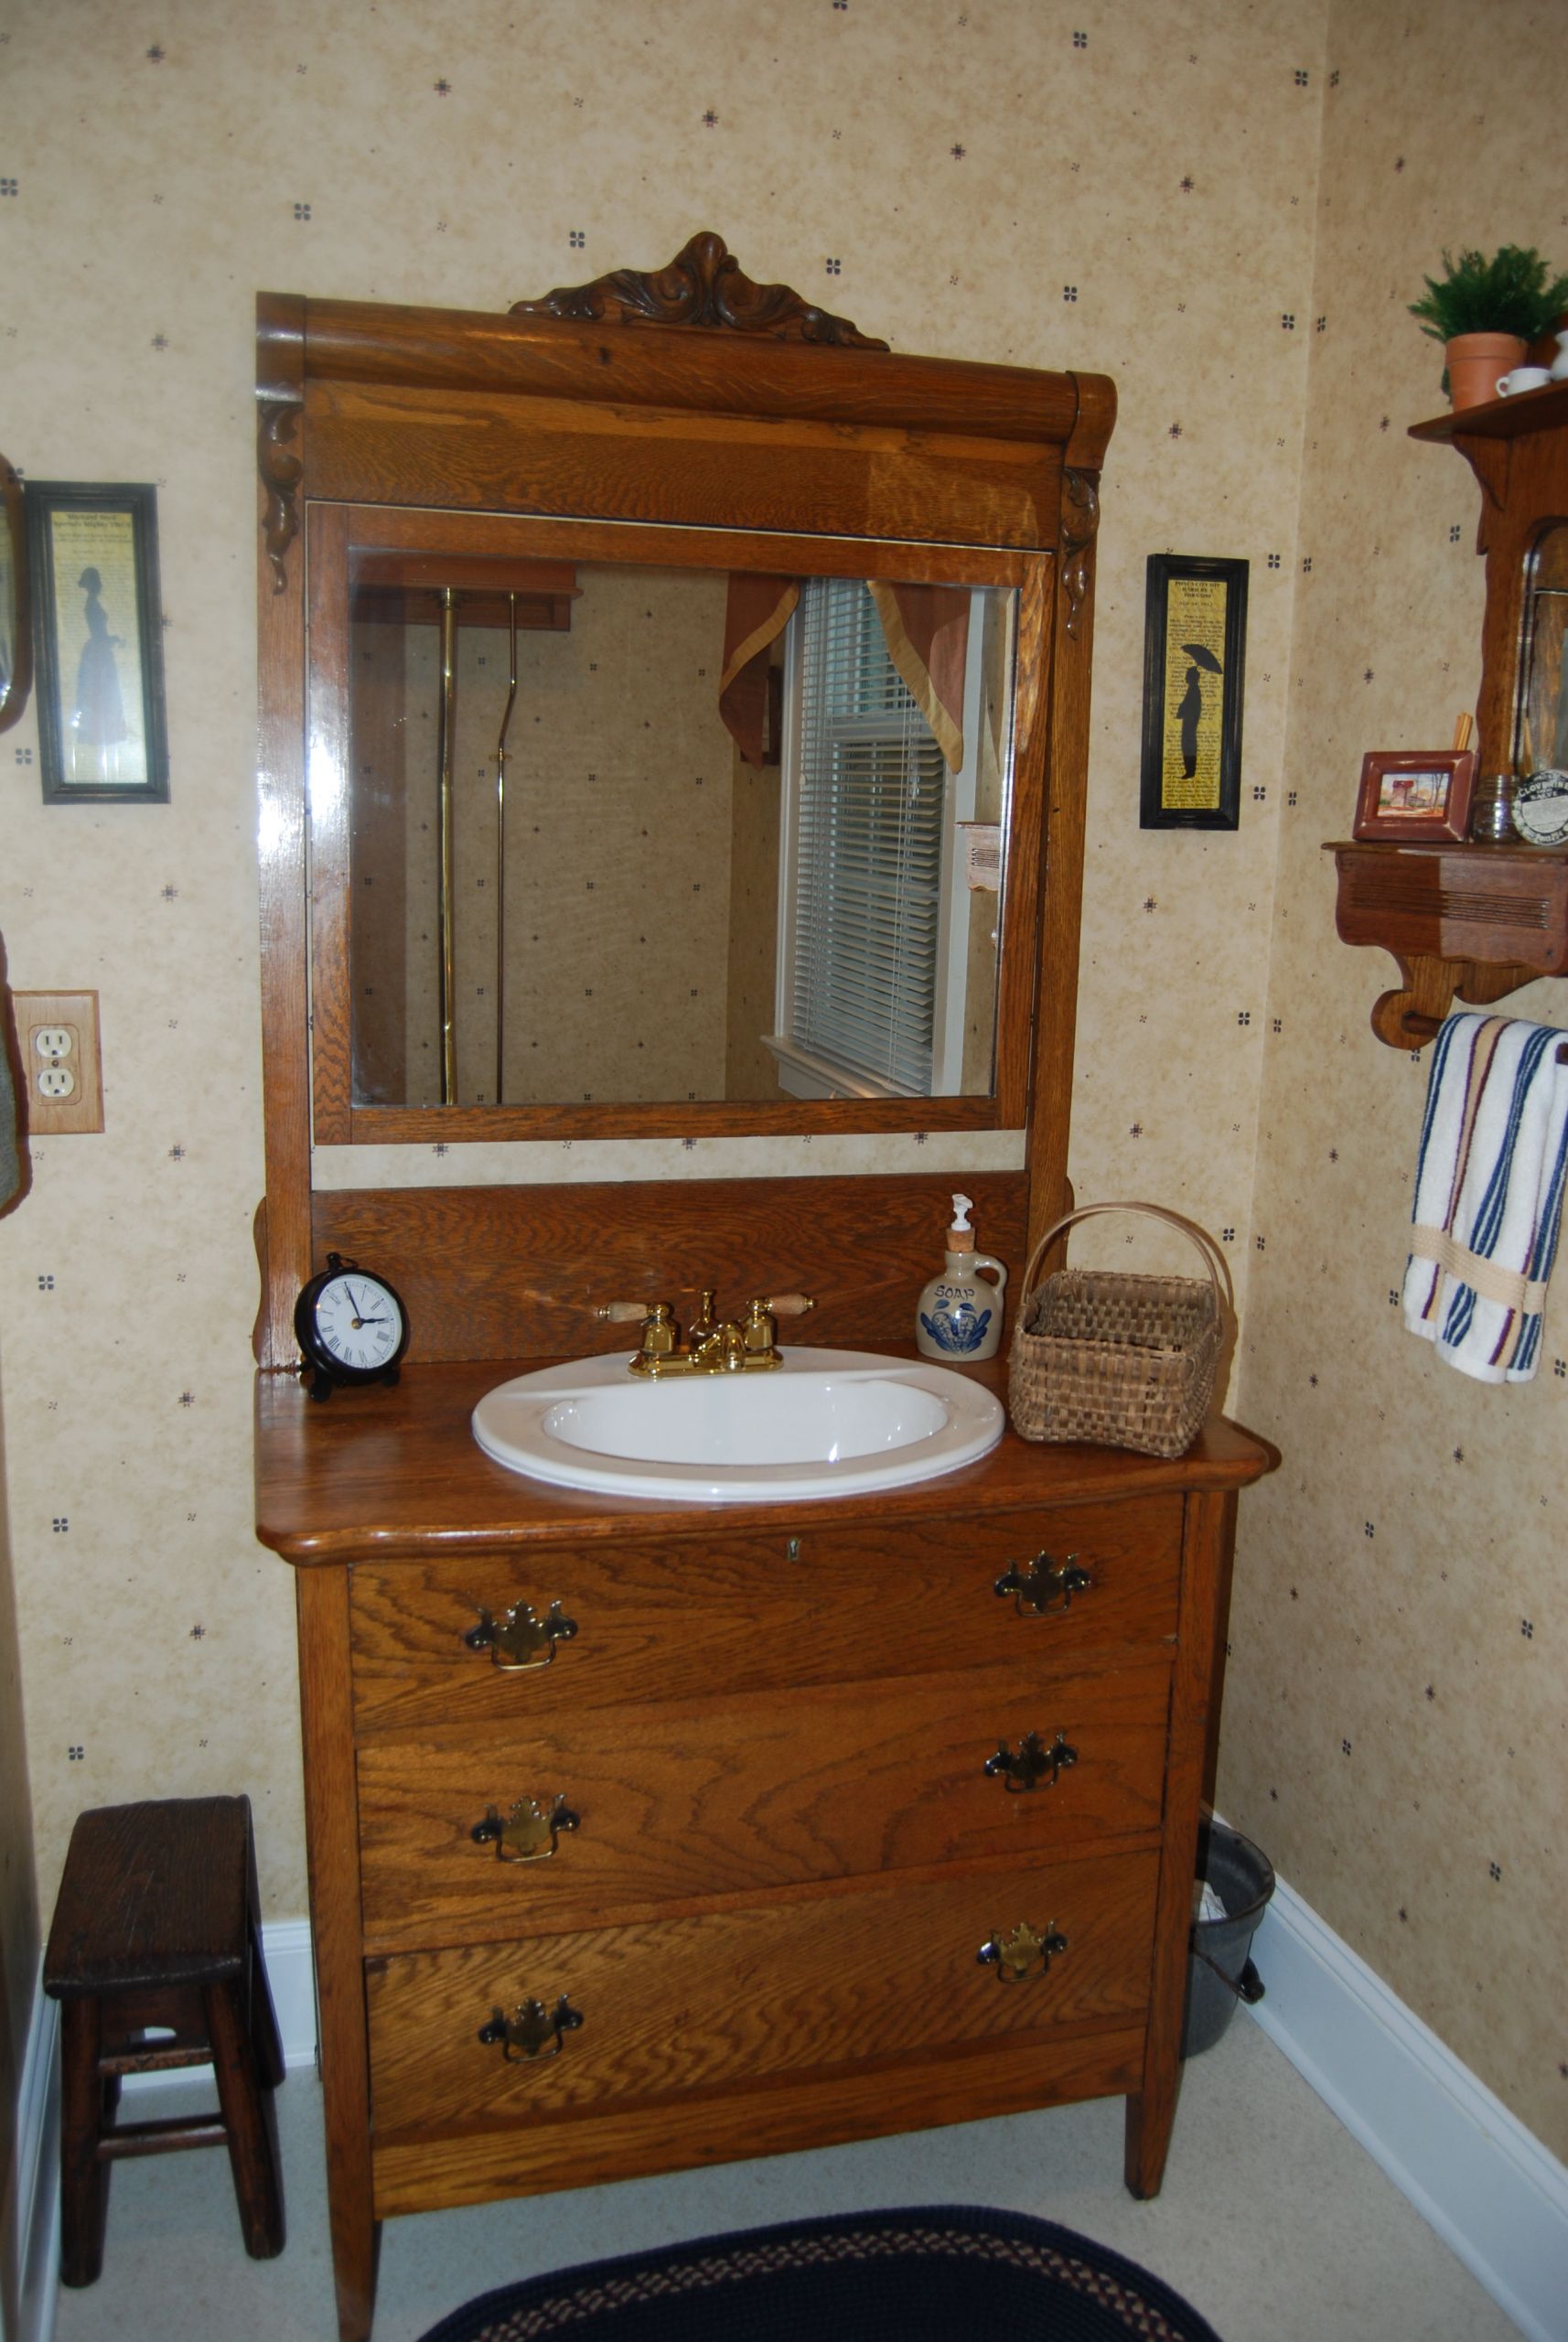 Dresser Style Bathroom Vanity
 oak dresser